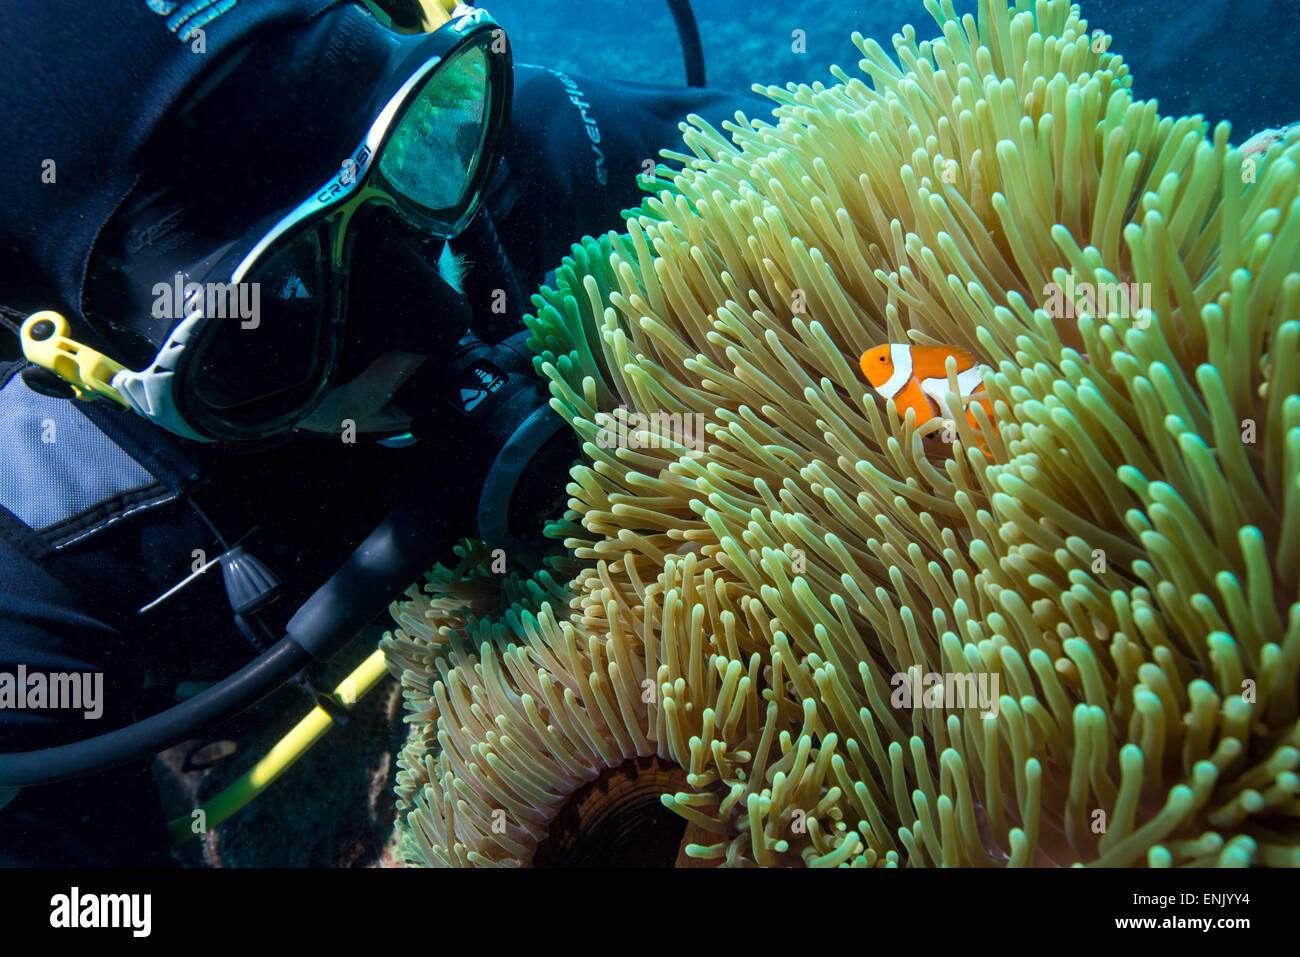 Scuba diver with False clown anenomefish and anemone, Magnificent Sea Anemone, Cairns, Queensland, Australia Stock Photo